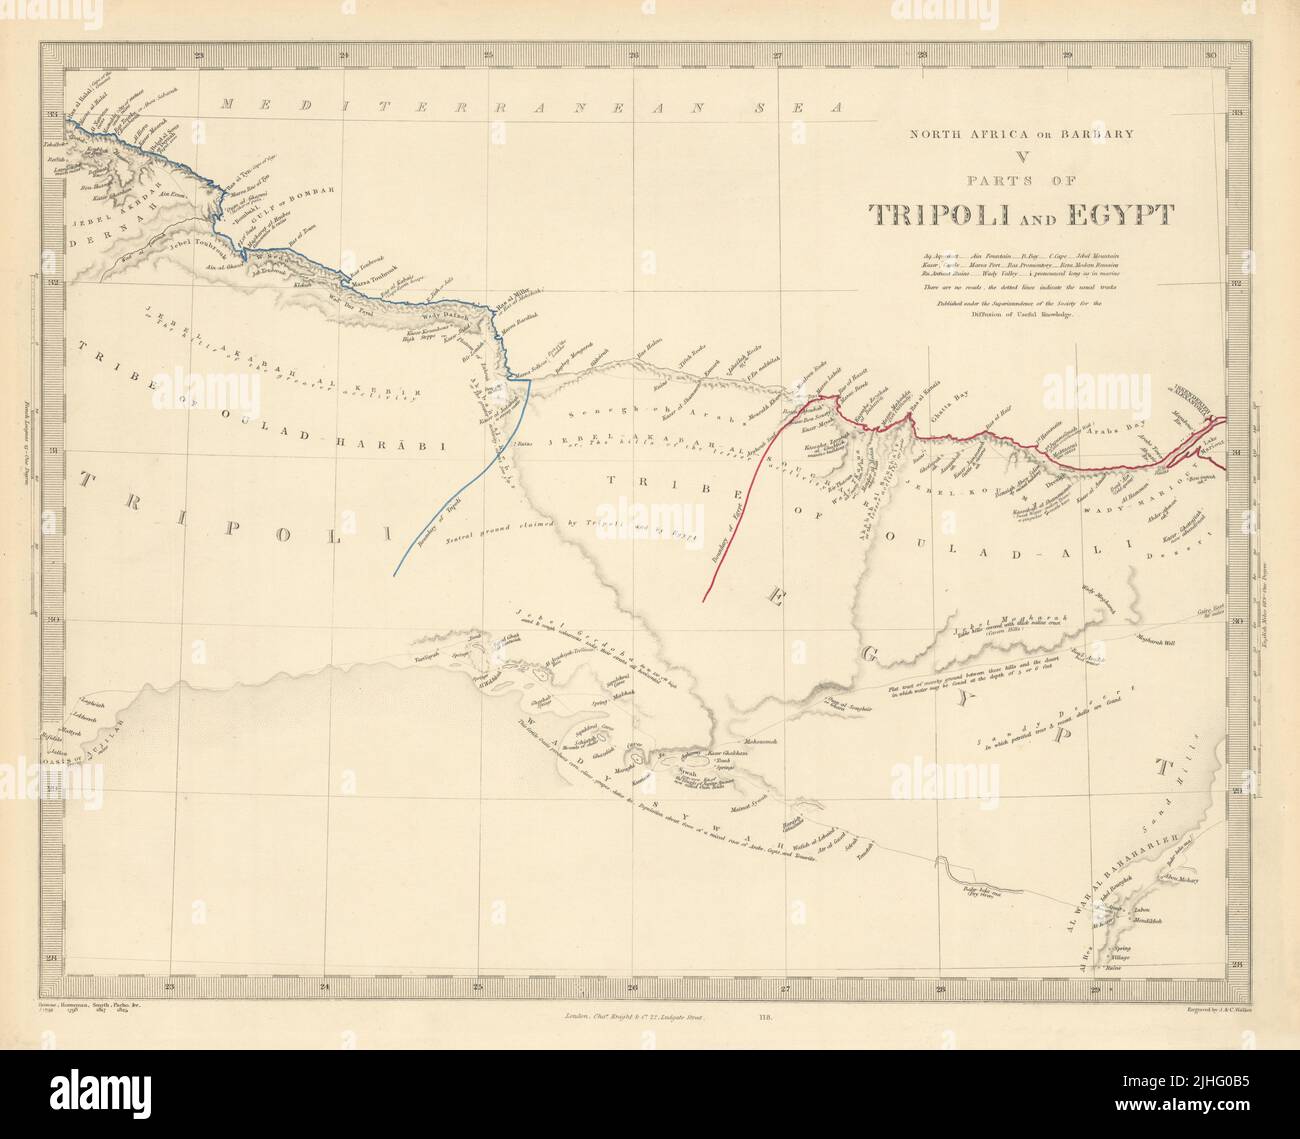 NORTH AFRICA OF BABRBARY V Parts of Tripoli & Egypt. Libya Tribes. SDUK 1851 map Stock Photo